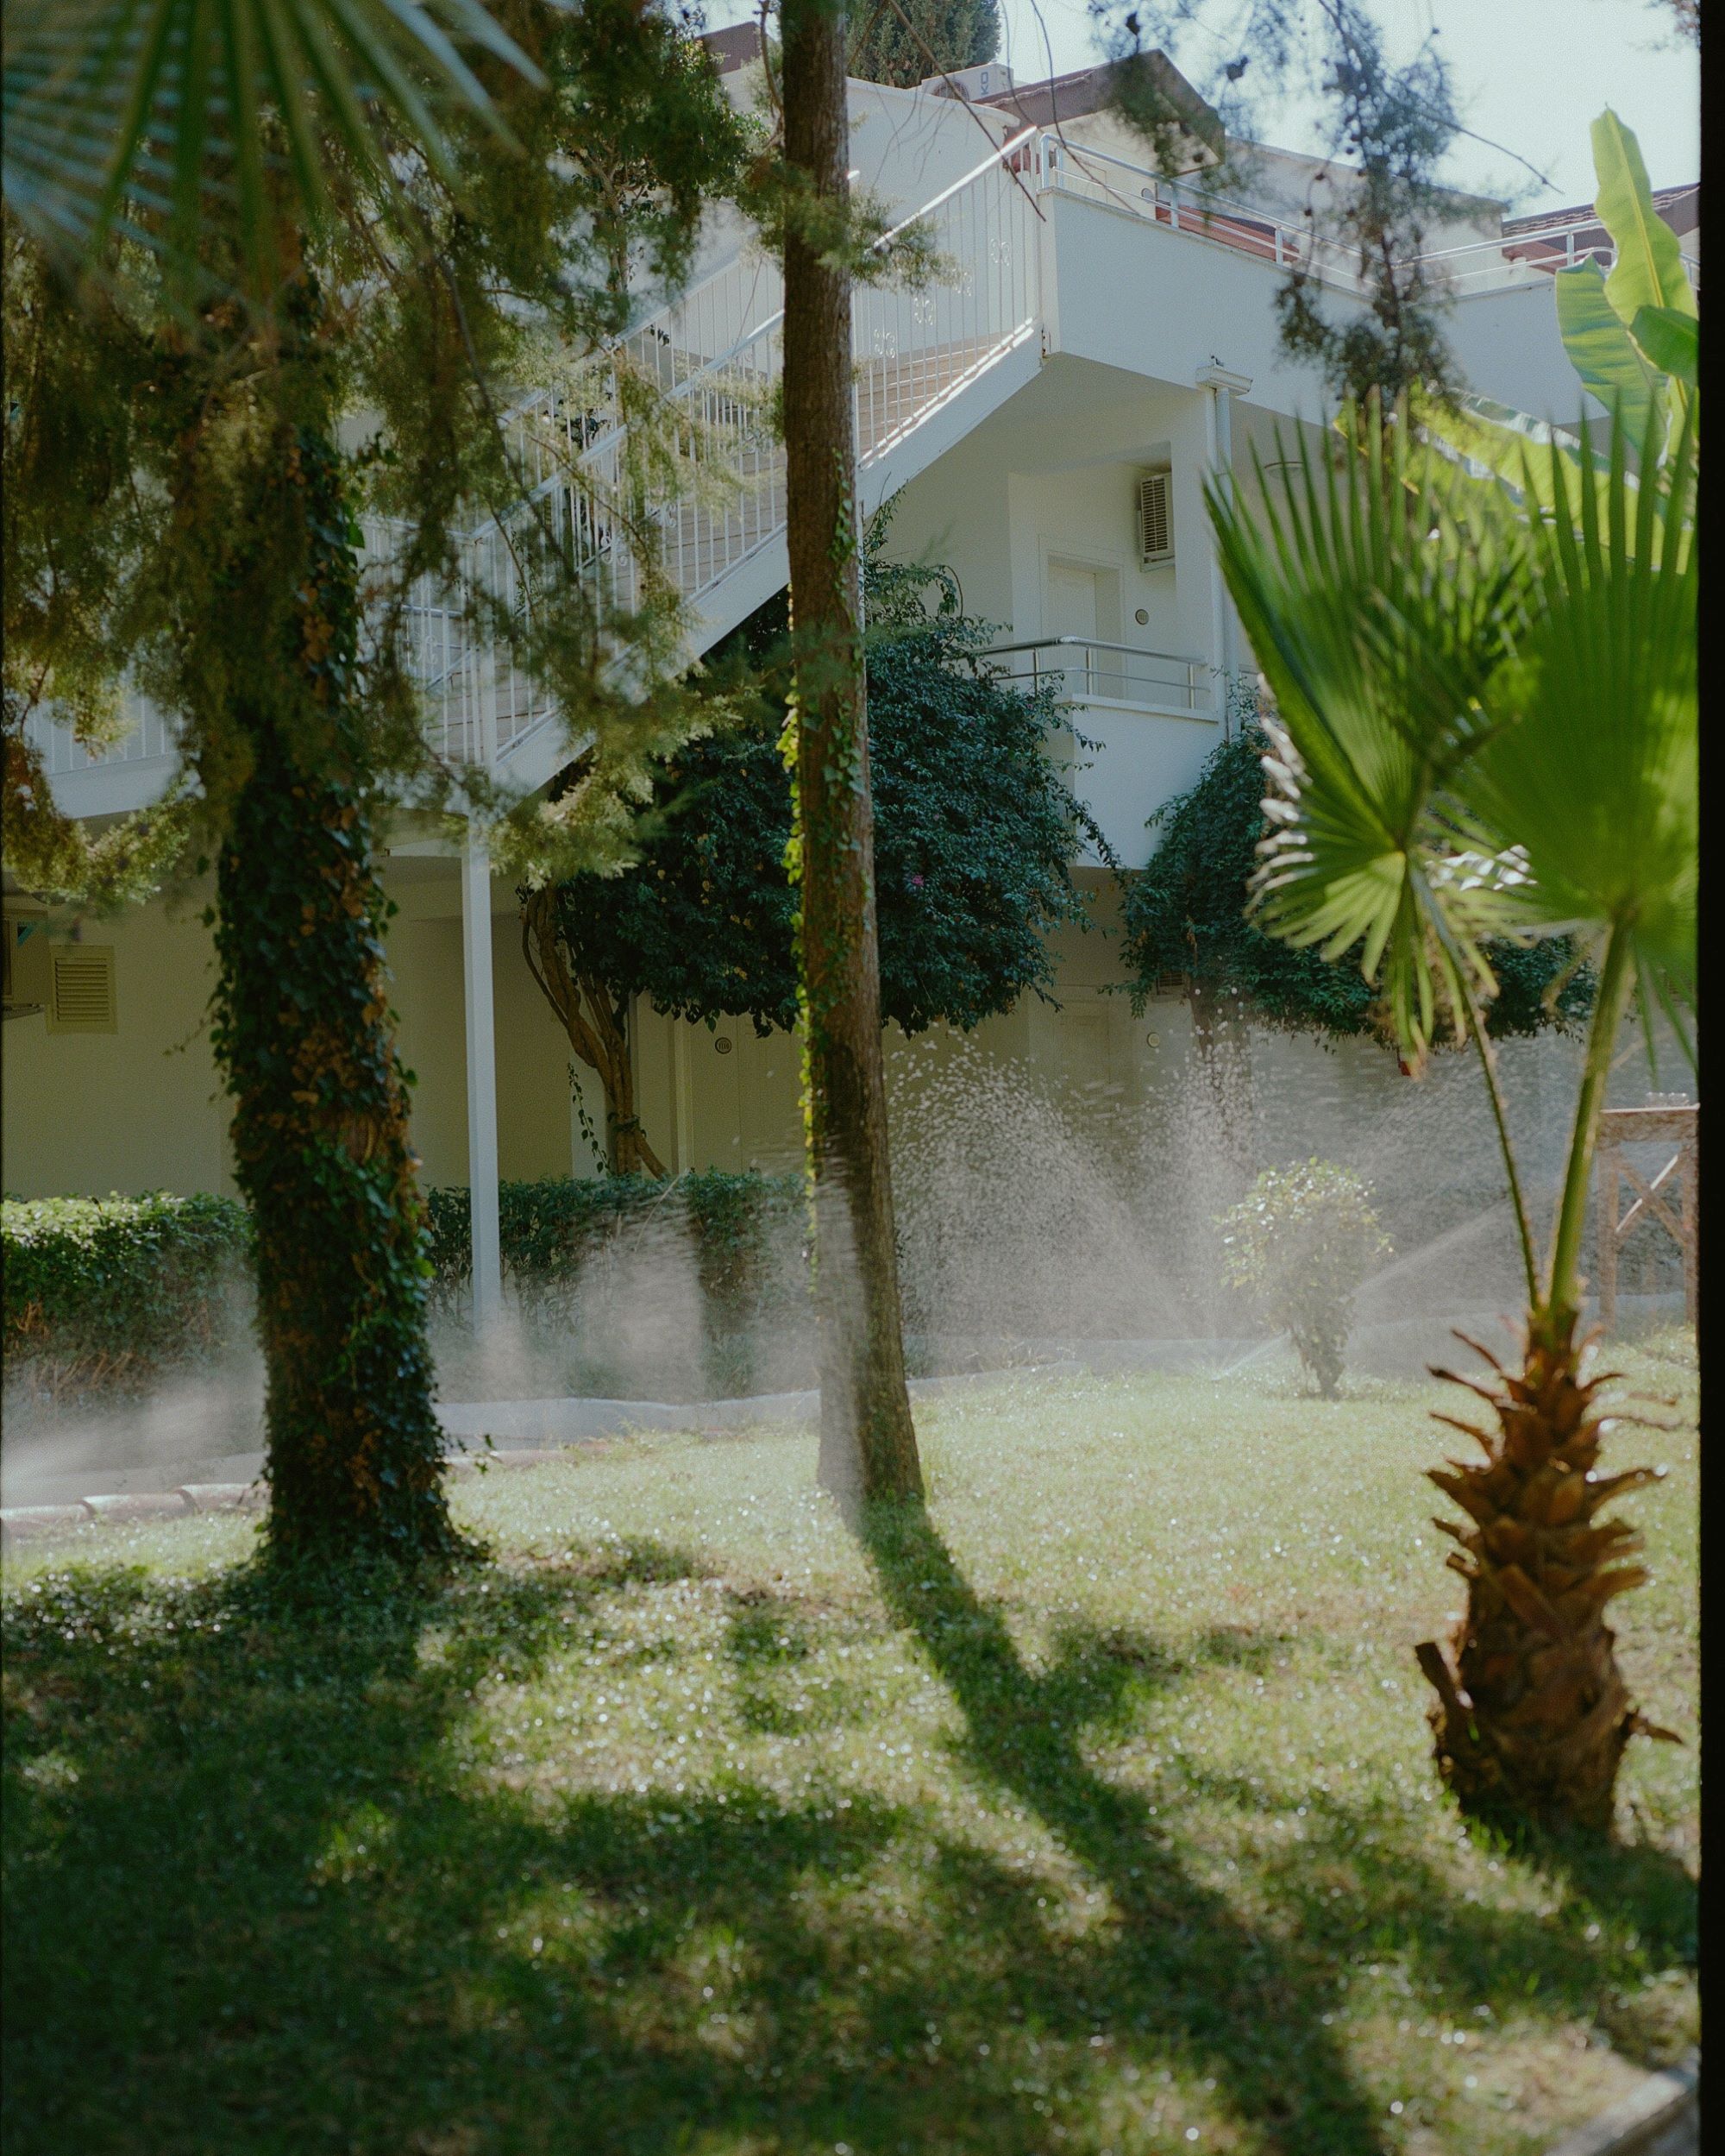 California Green Building Code (CALGreen) - Outdoor potable water use in landscape areas